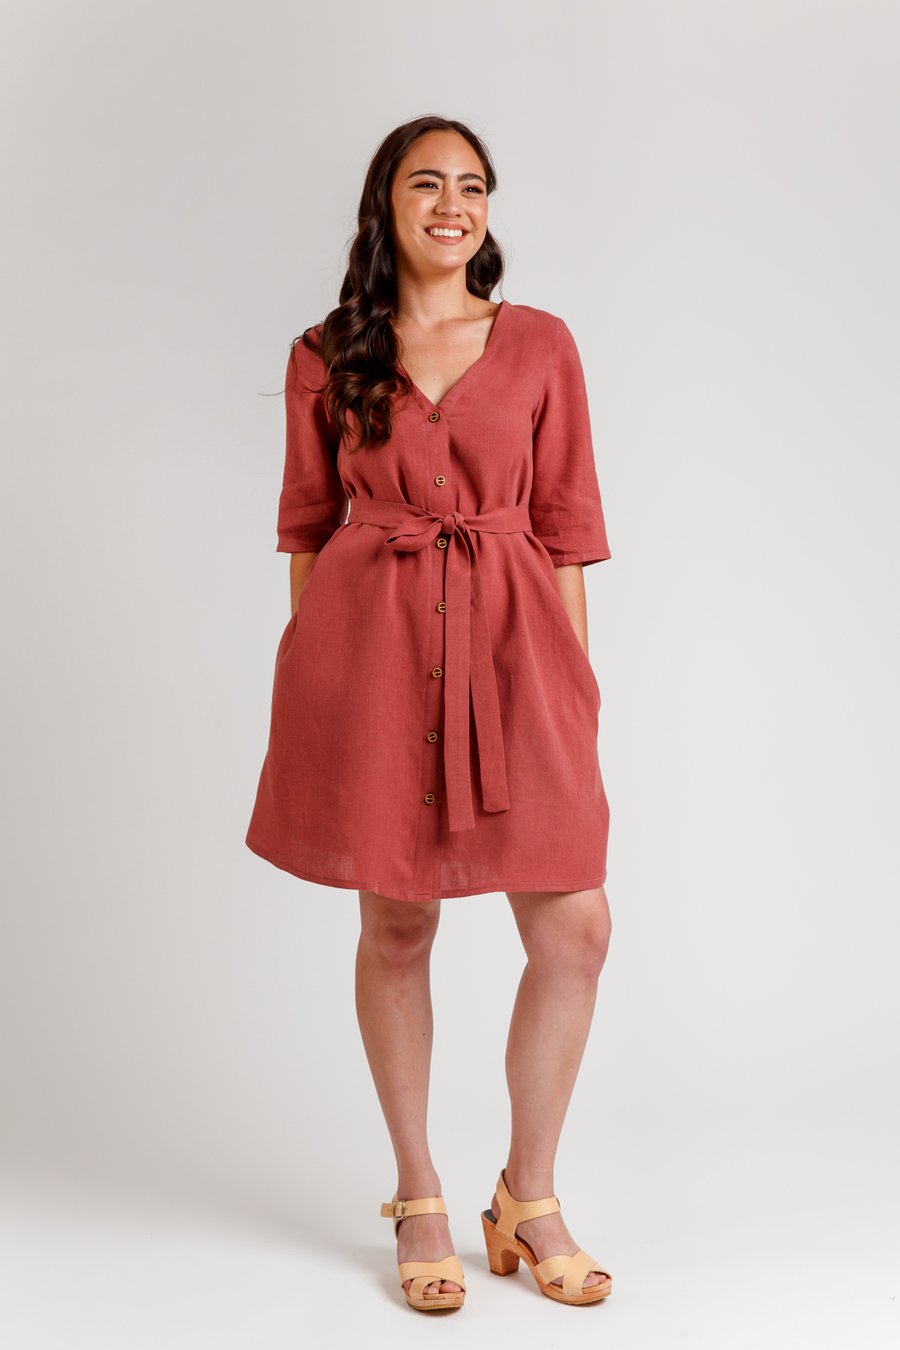 Darling Ranges Dress & Blouse by Megan Nielsen Patterns – Sew Yarn